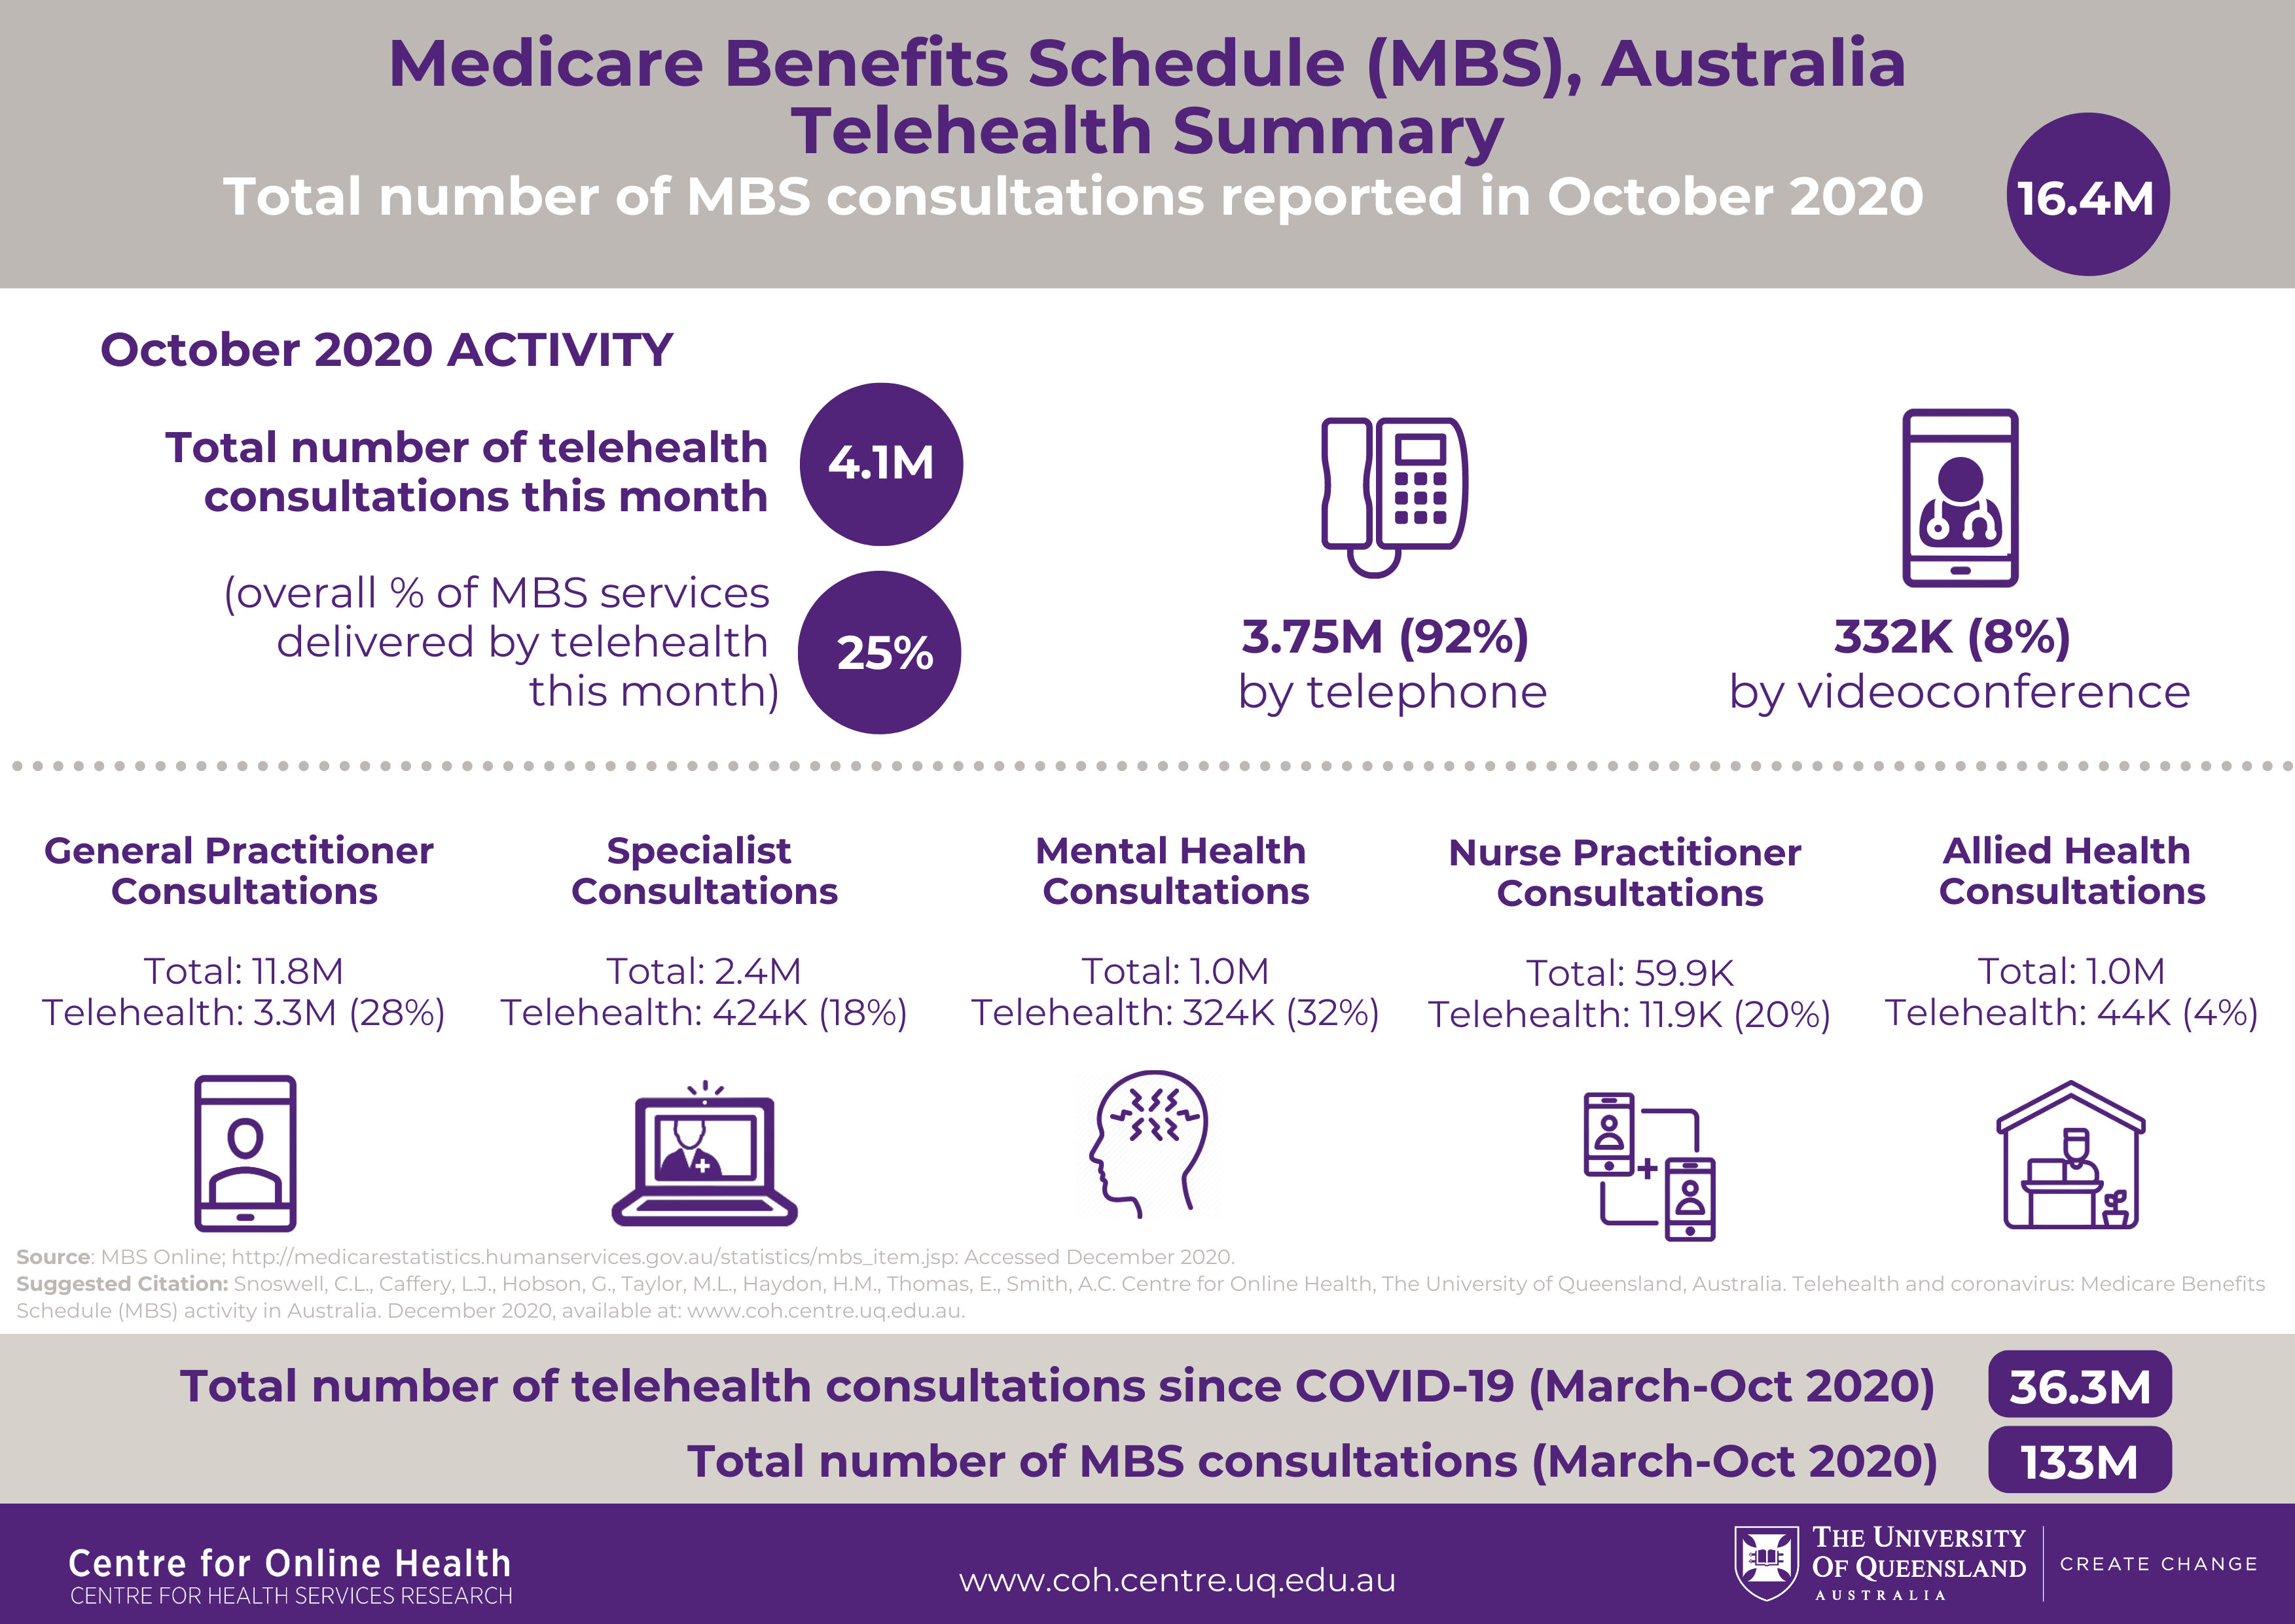 Telehealth and coronavirus Medicare Benefits Schedule (MBS) activity